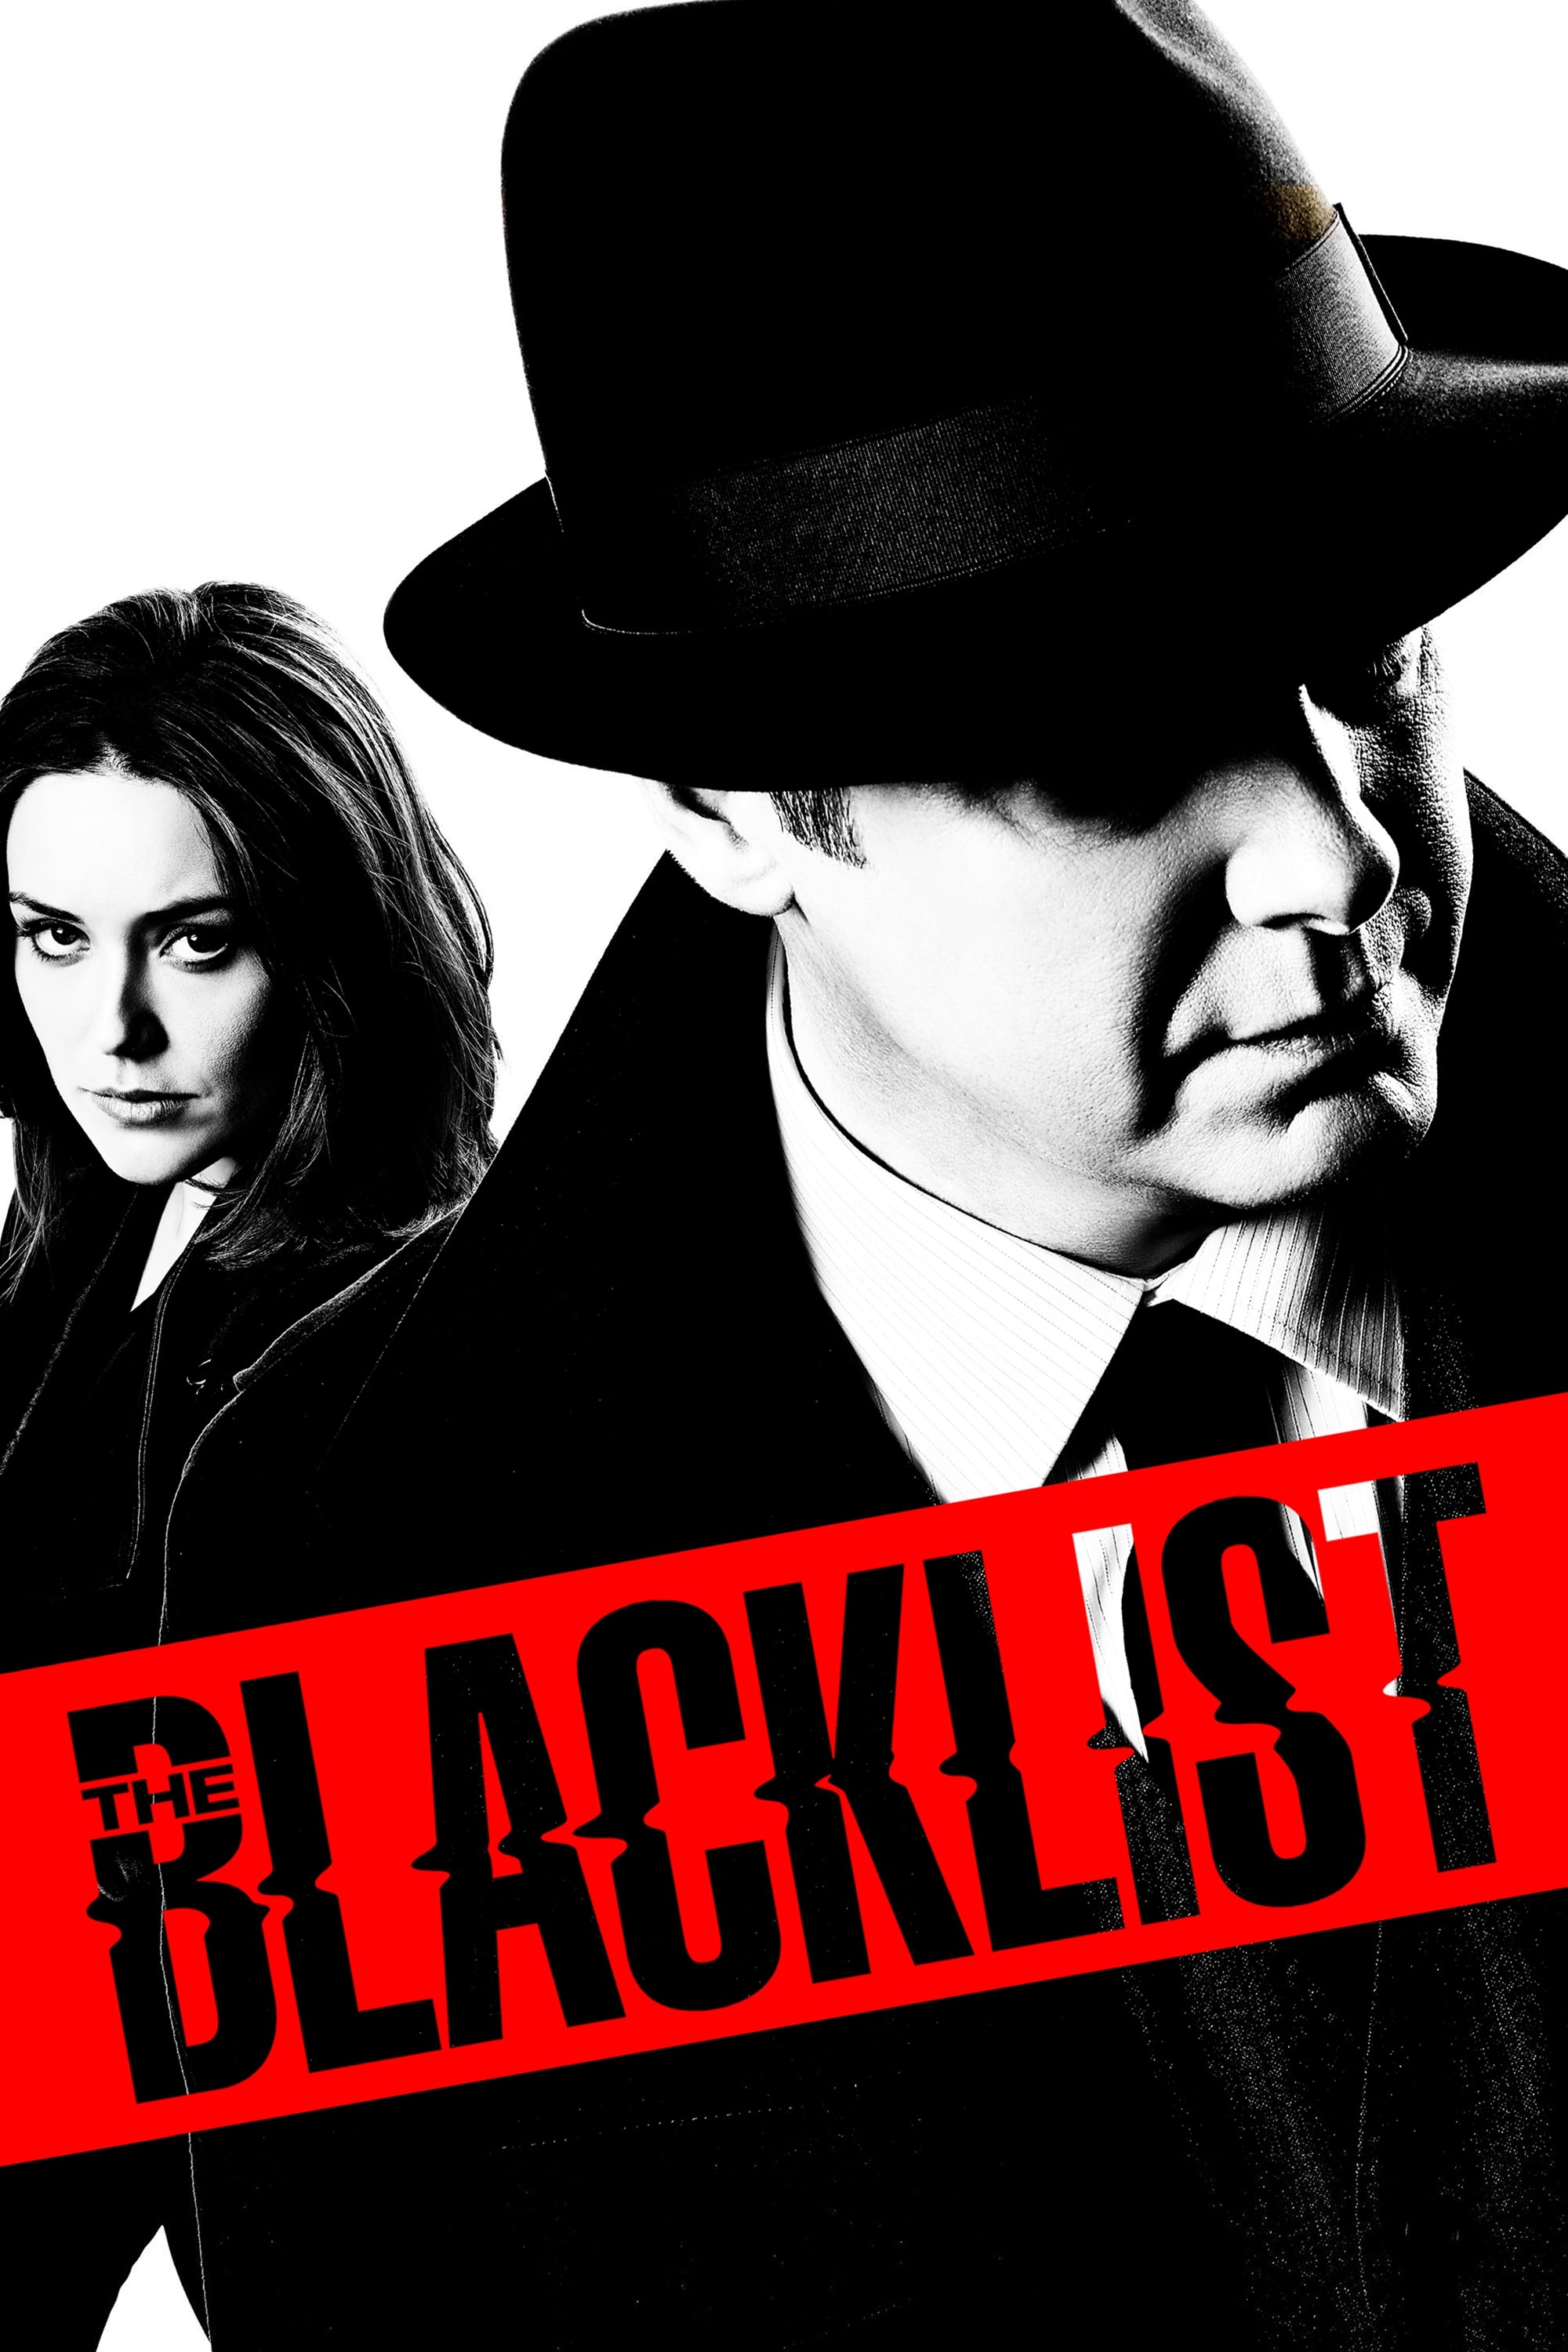 The Blacklist TV Shows About Criminal Mastermind